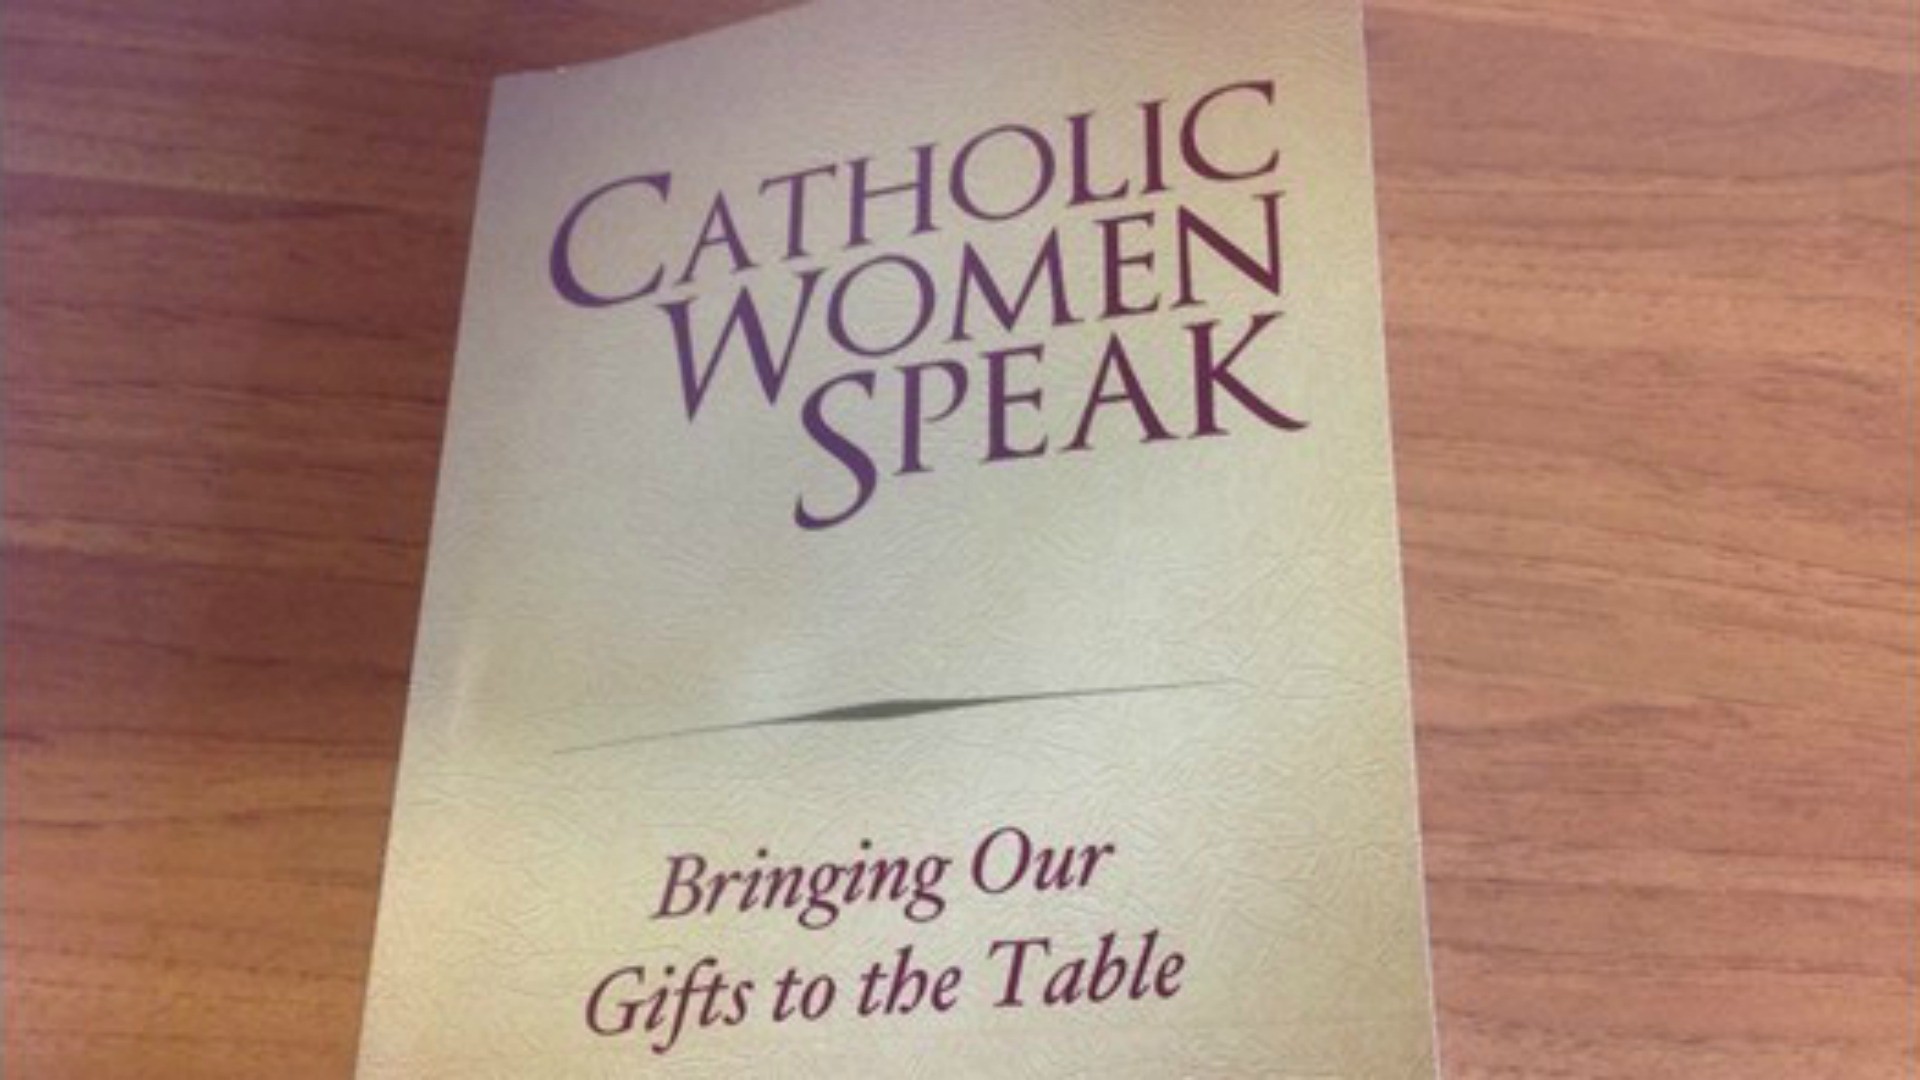 Catholic Women Speak (Photo;
: Radio Vatican)